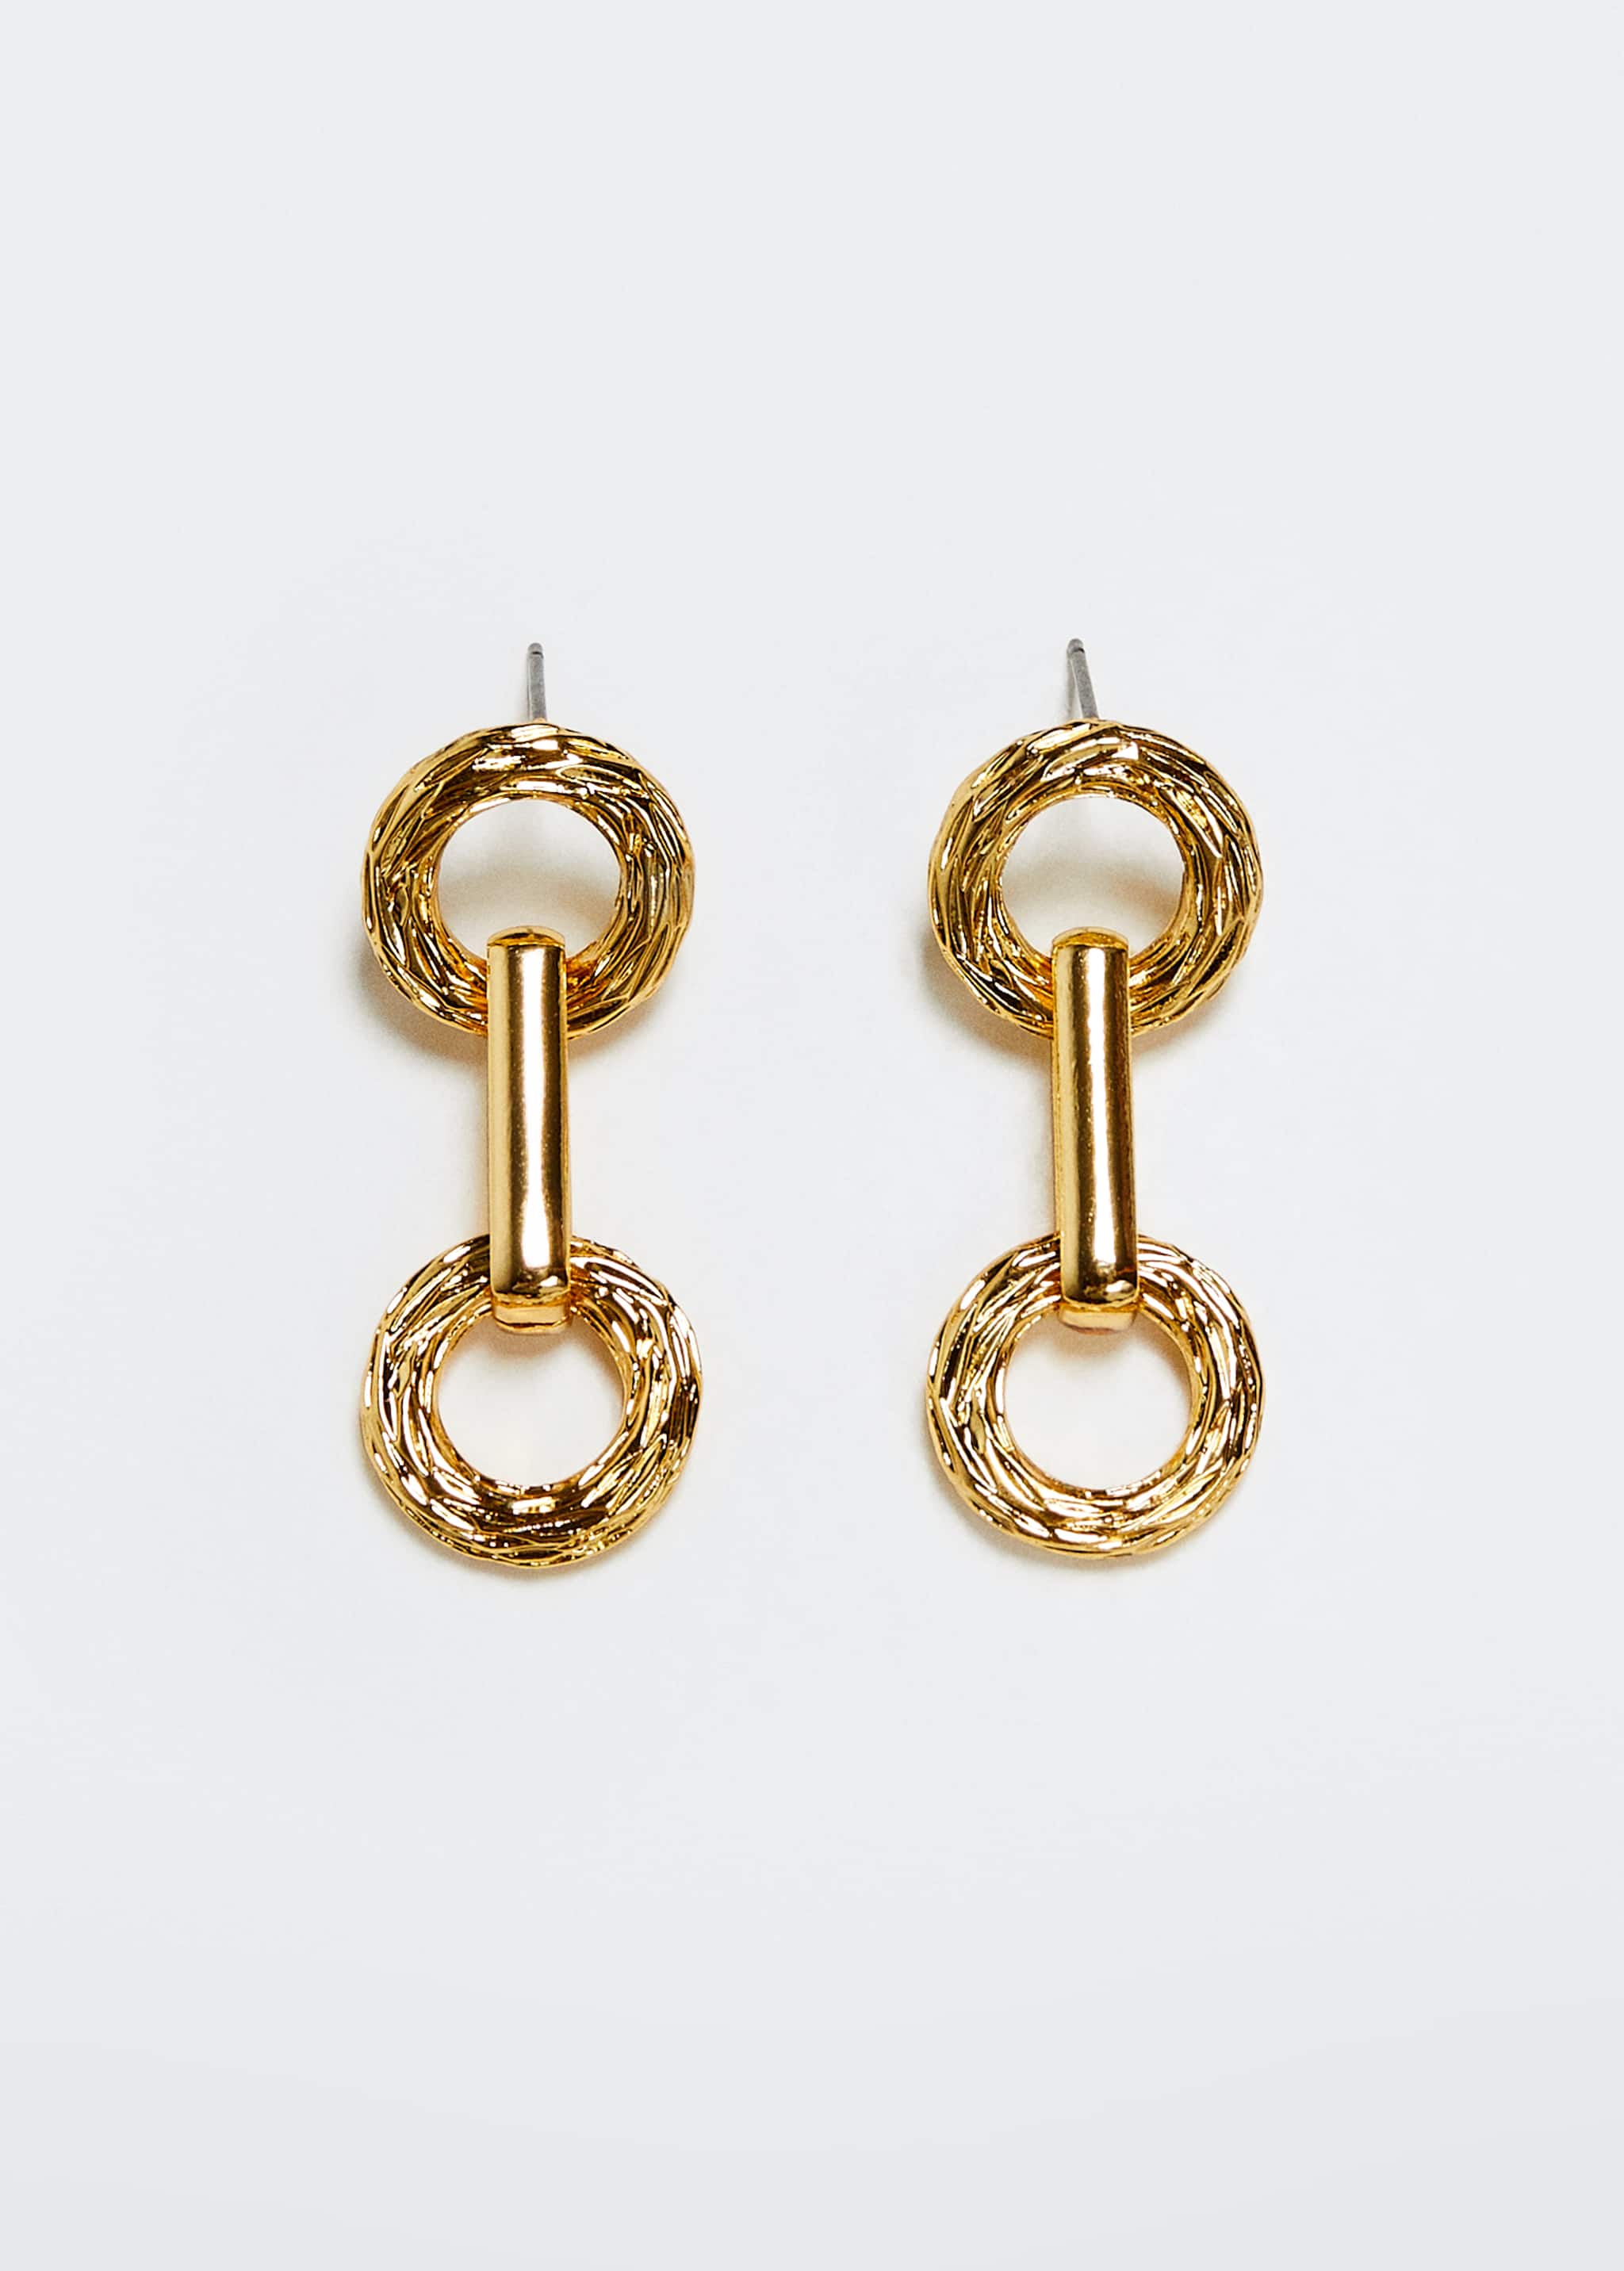 Double hoop earrings - Article without model